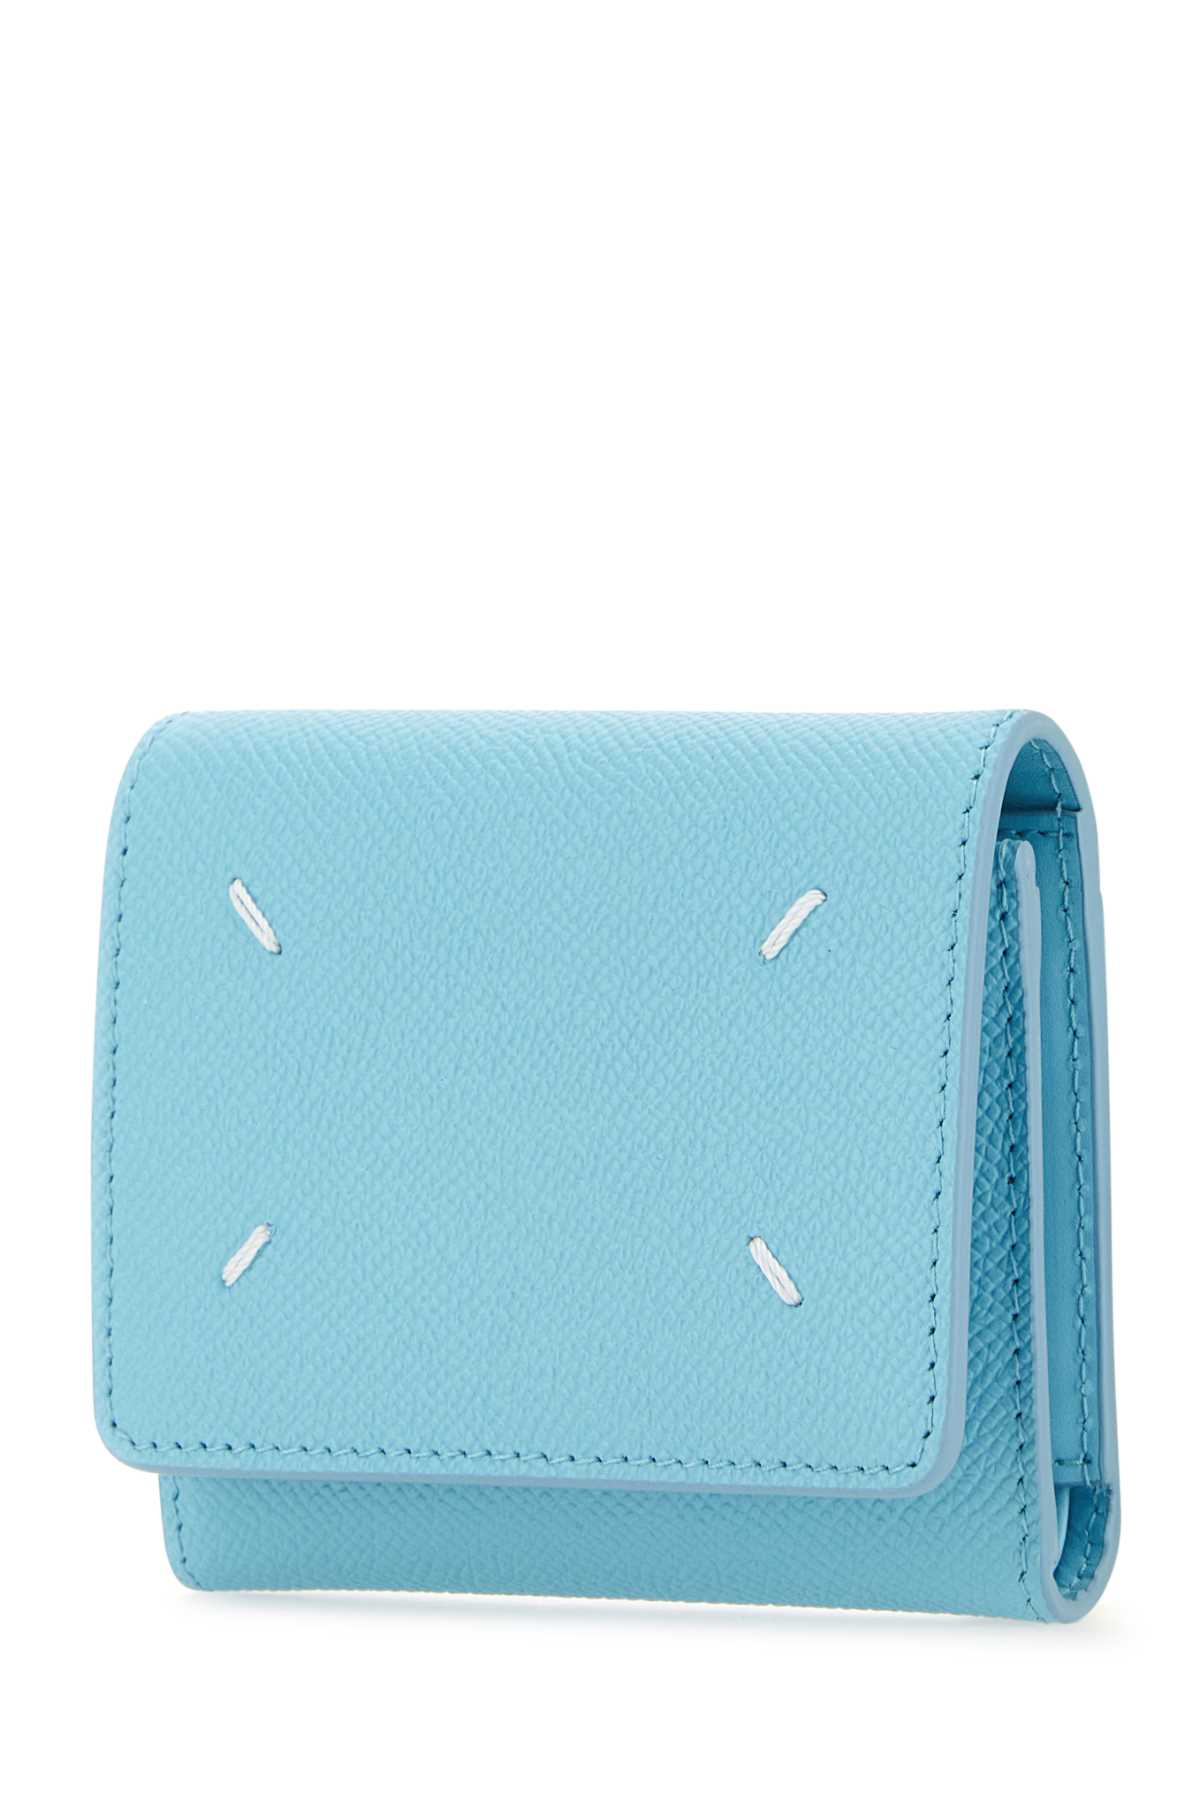 Maison Margiela Light-blue Leather Wallet In Aqua